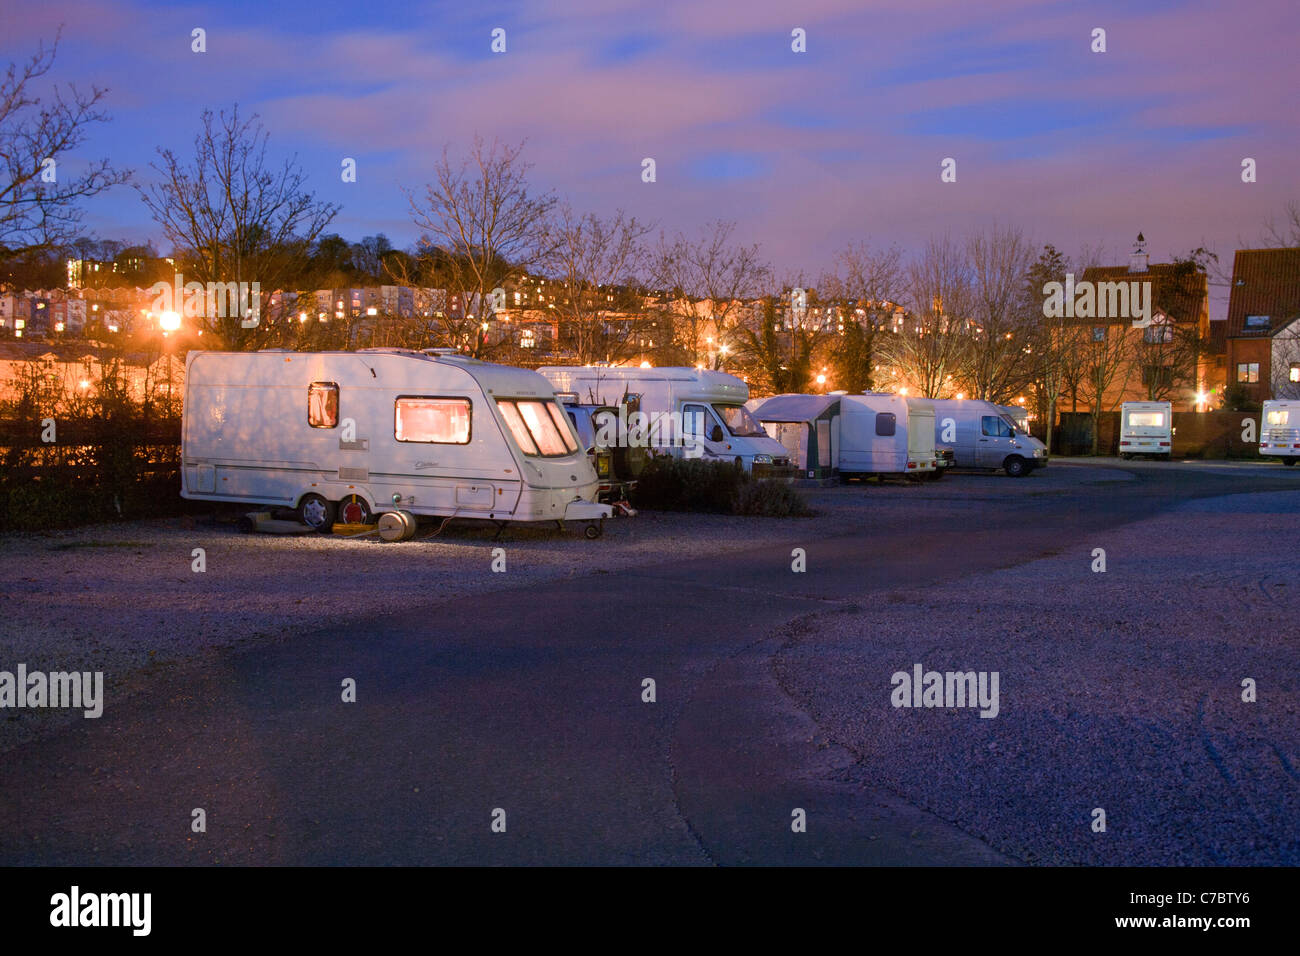 Bristol Caravan Club Site at night; UK Stock Photo